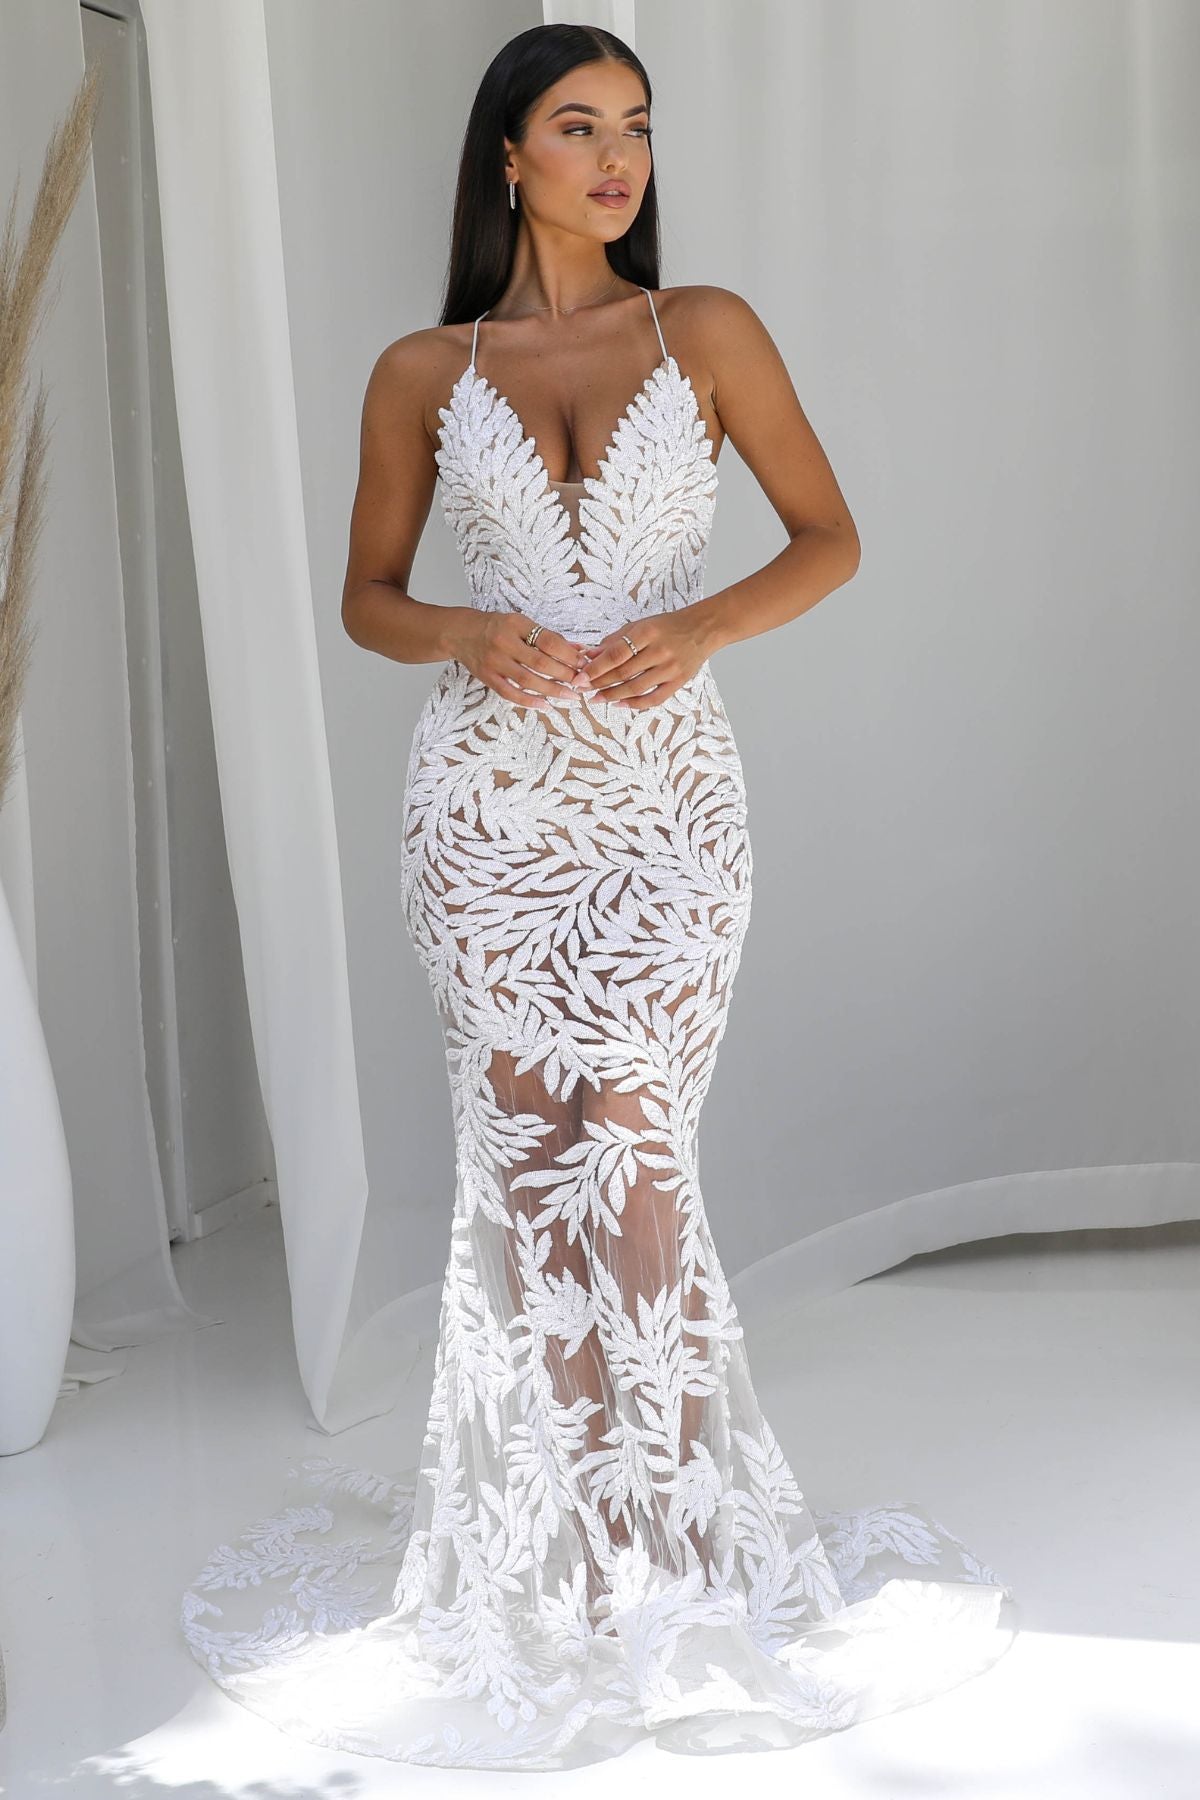 Nadine Merabi - 🔥🔥 Our stunning 'STELLA' white dress is back in